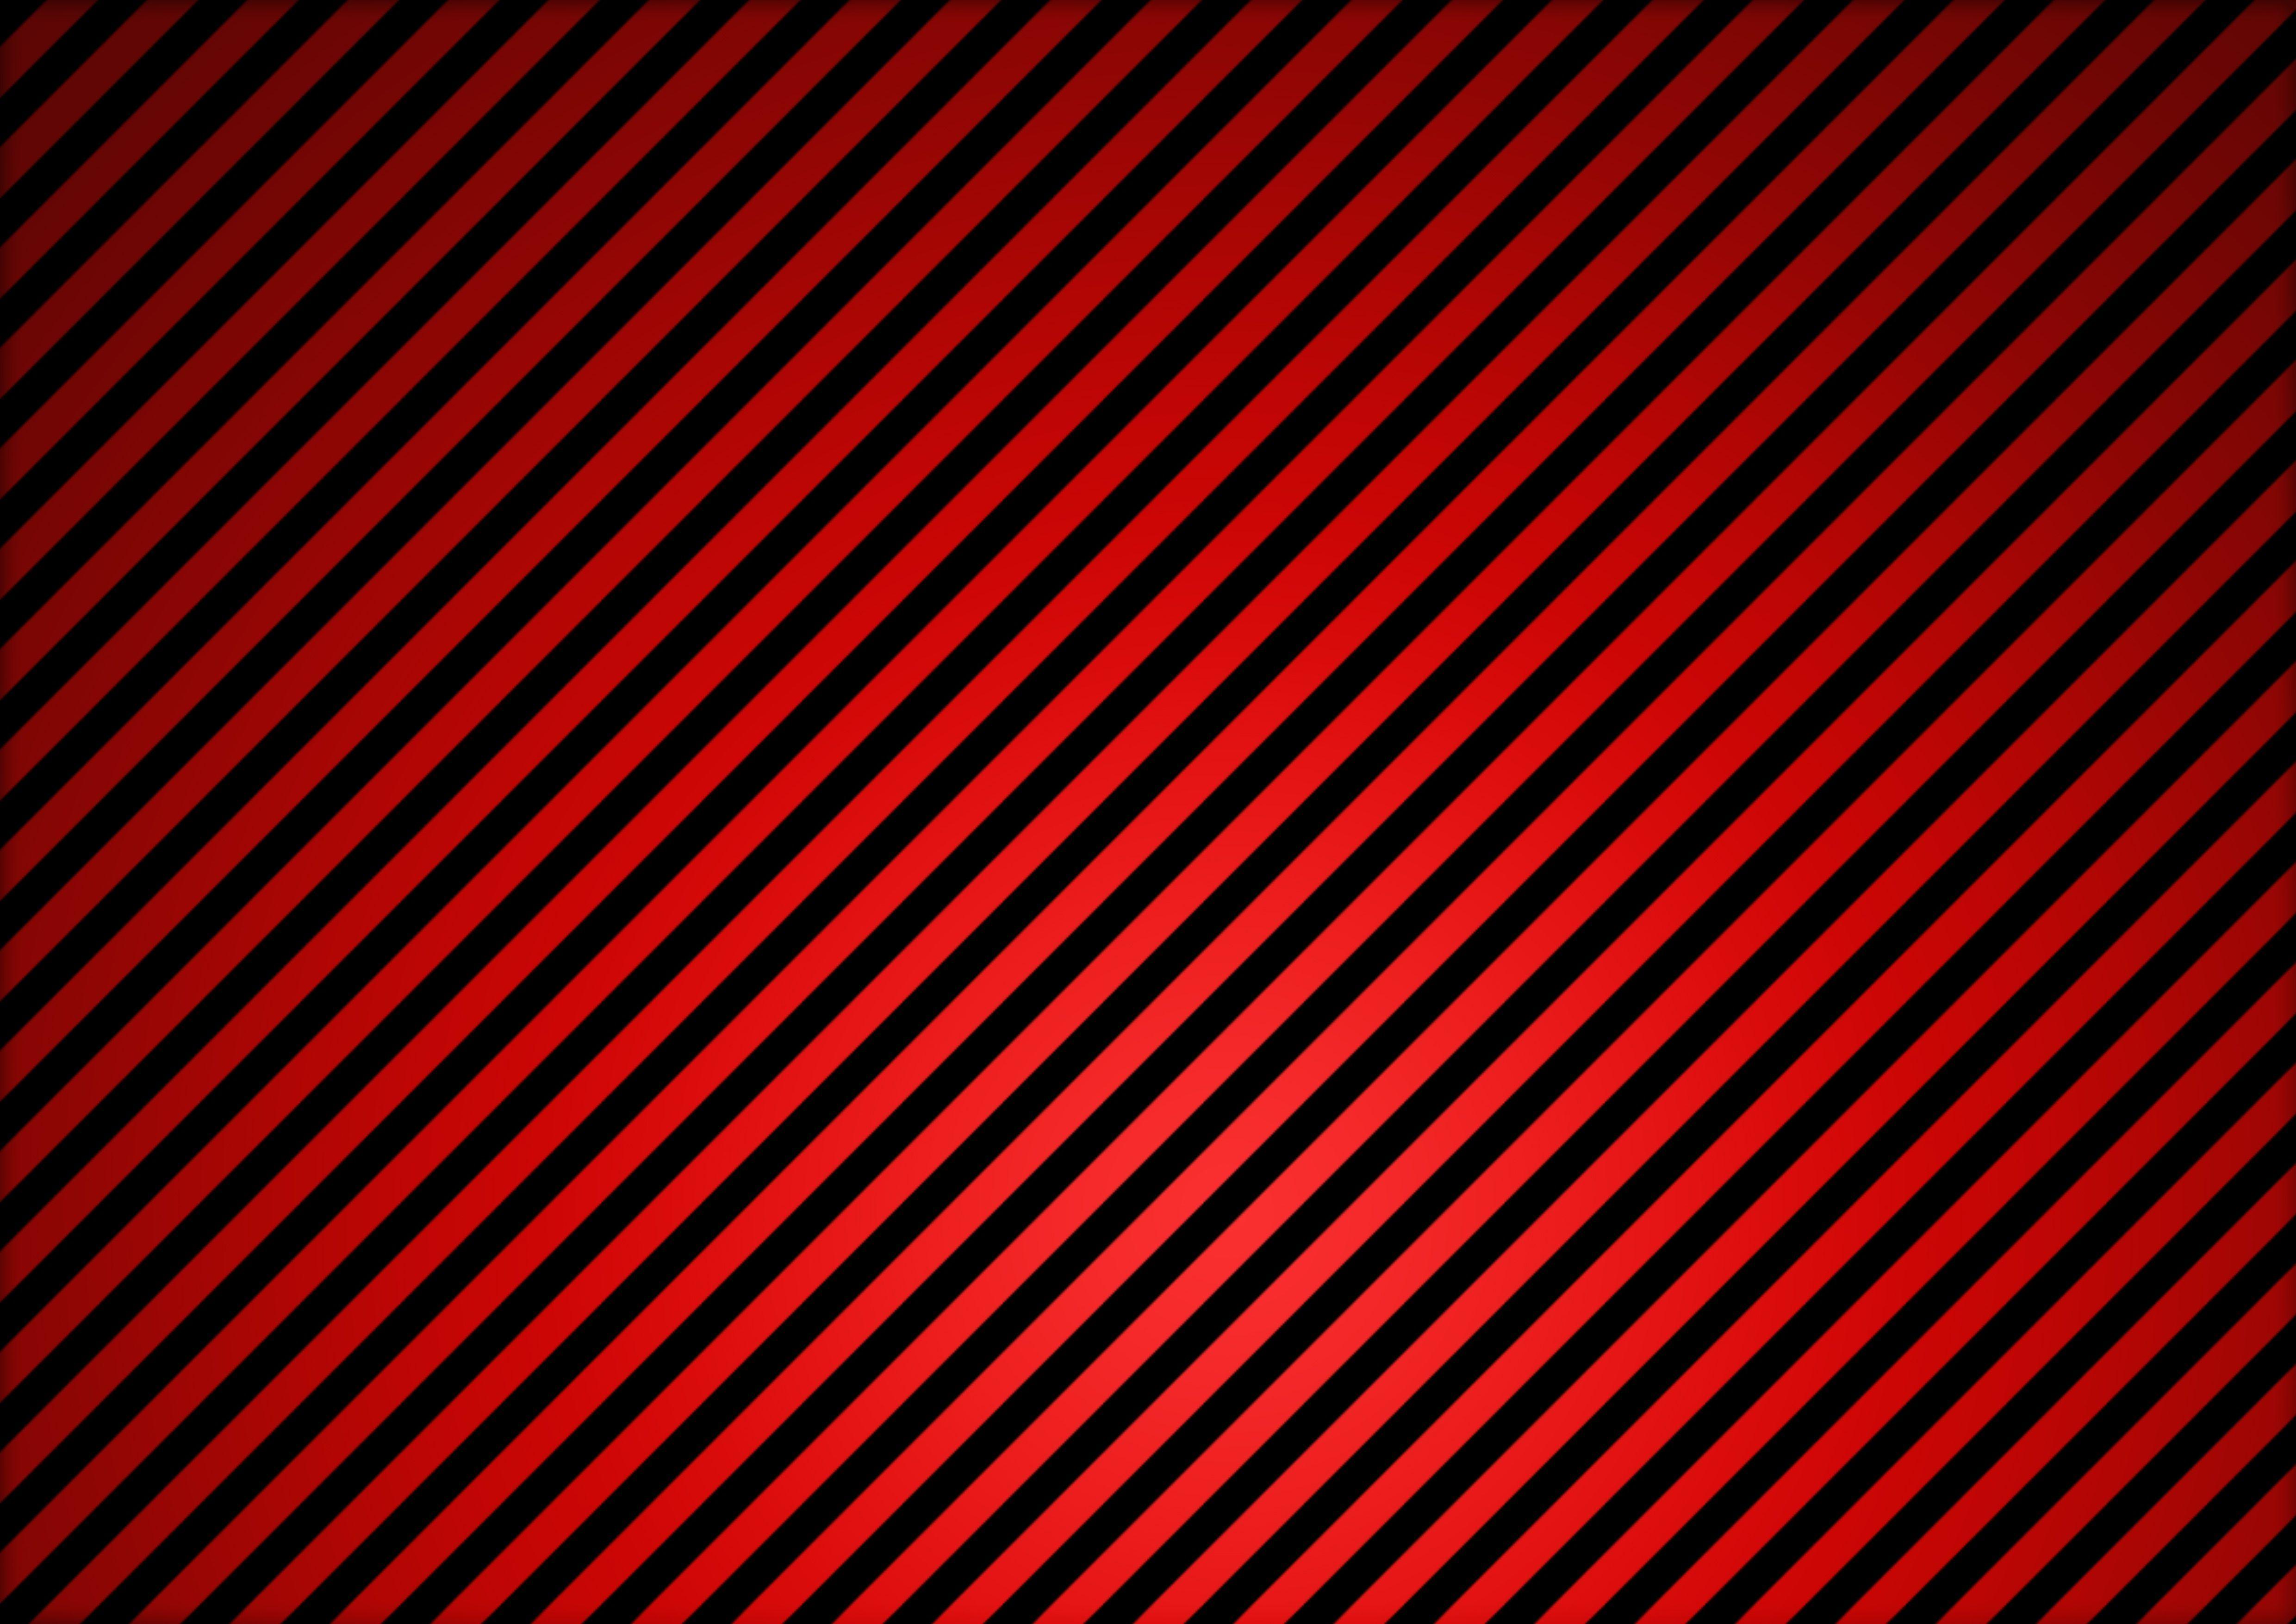 Diagonal Stripes Wallpapers - Top Free Diagonal Stripes Backgrounds ...